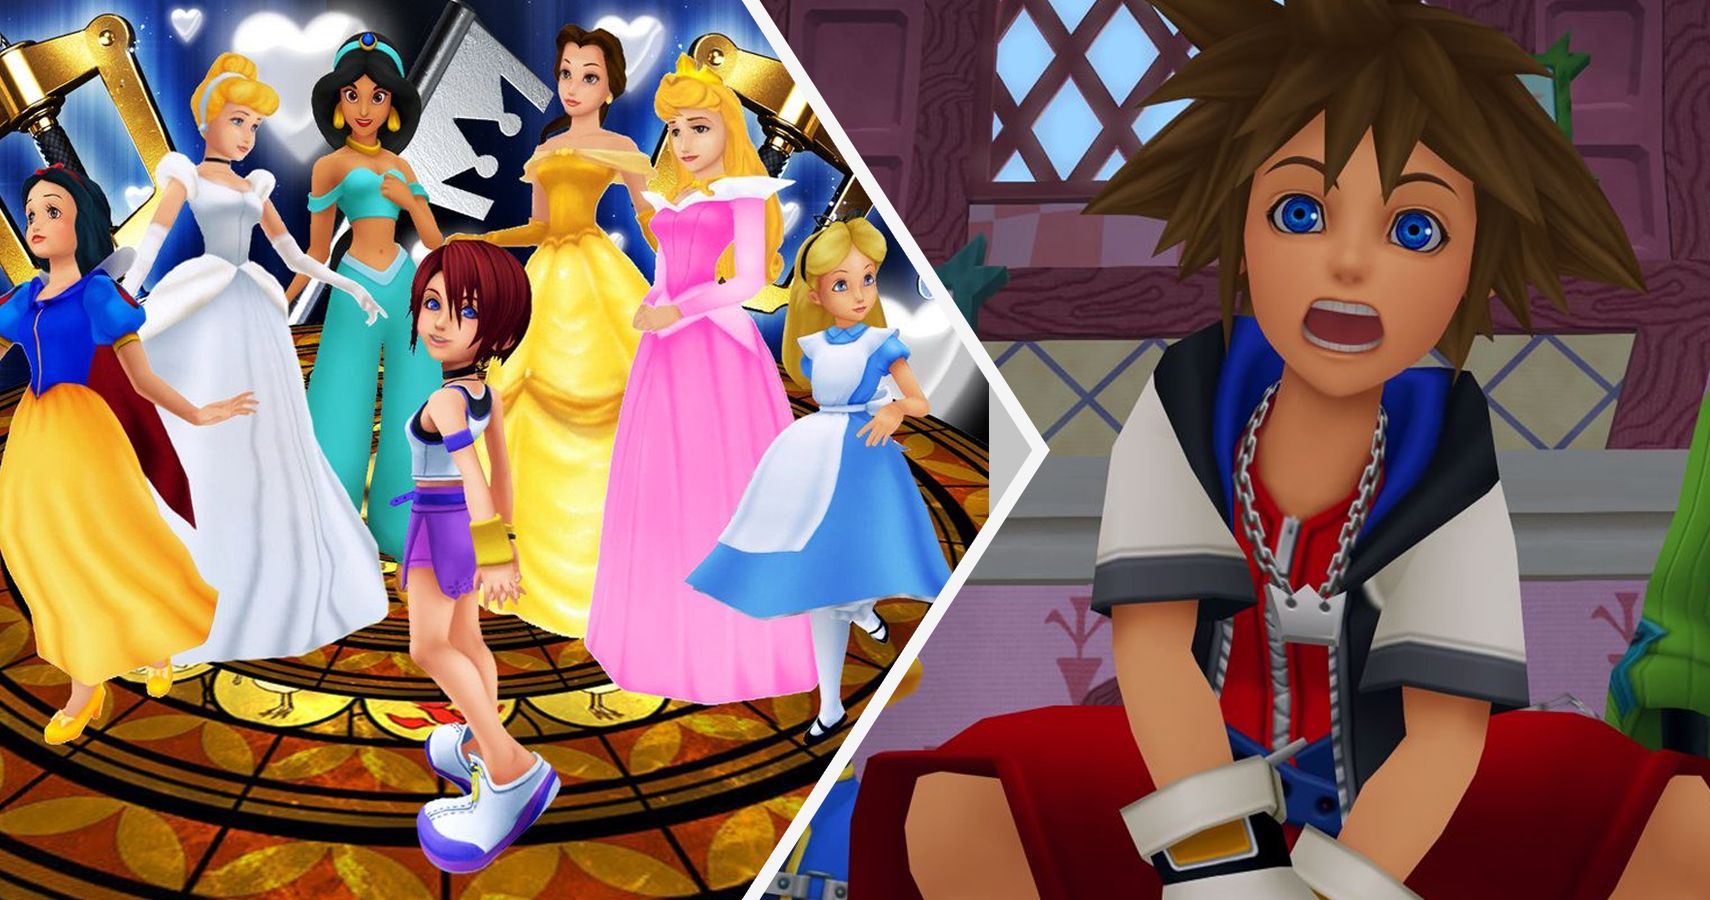 30 Things About Kingdom Hearts That Make No Sense Screenrant